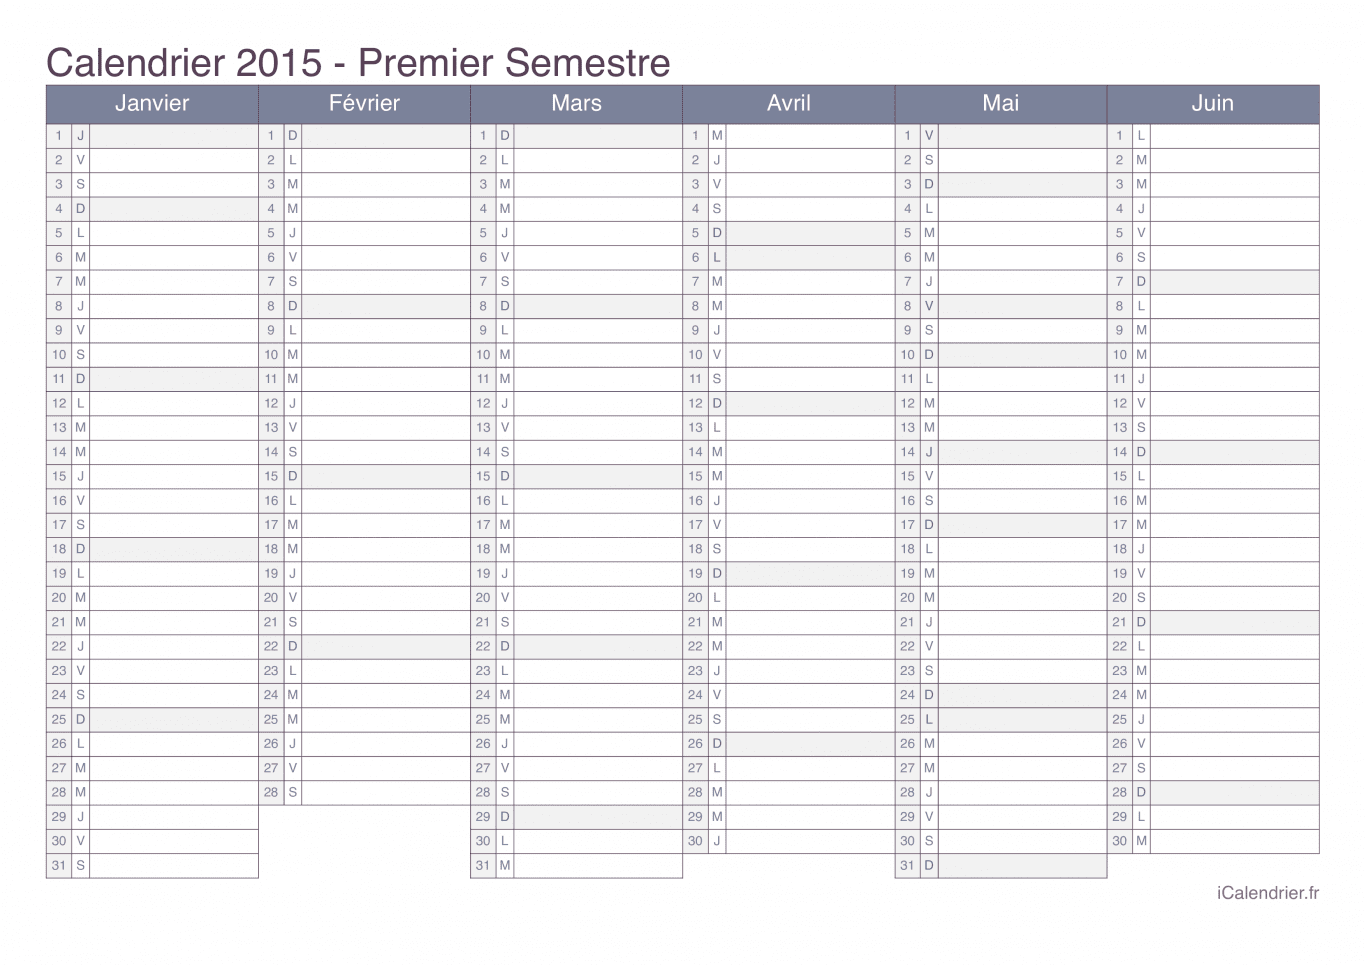 Calendrier par semestre 2015 - Office